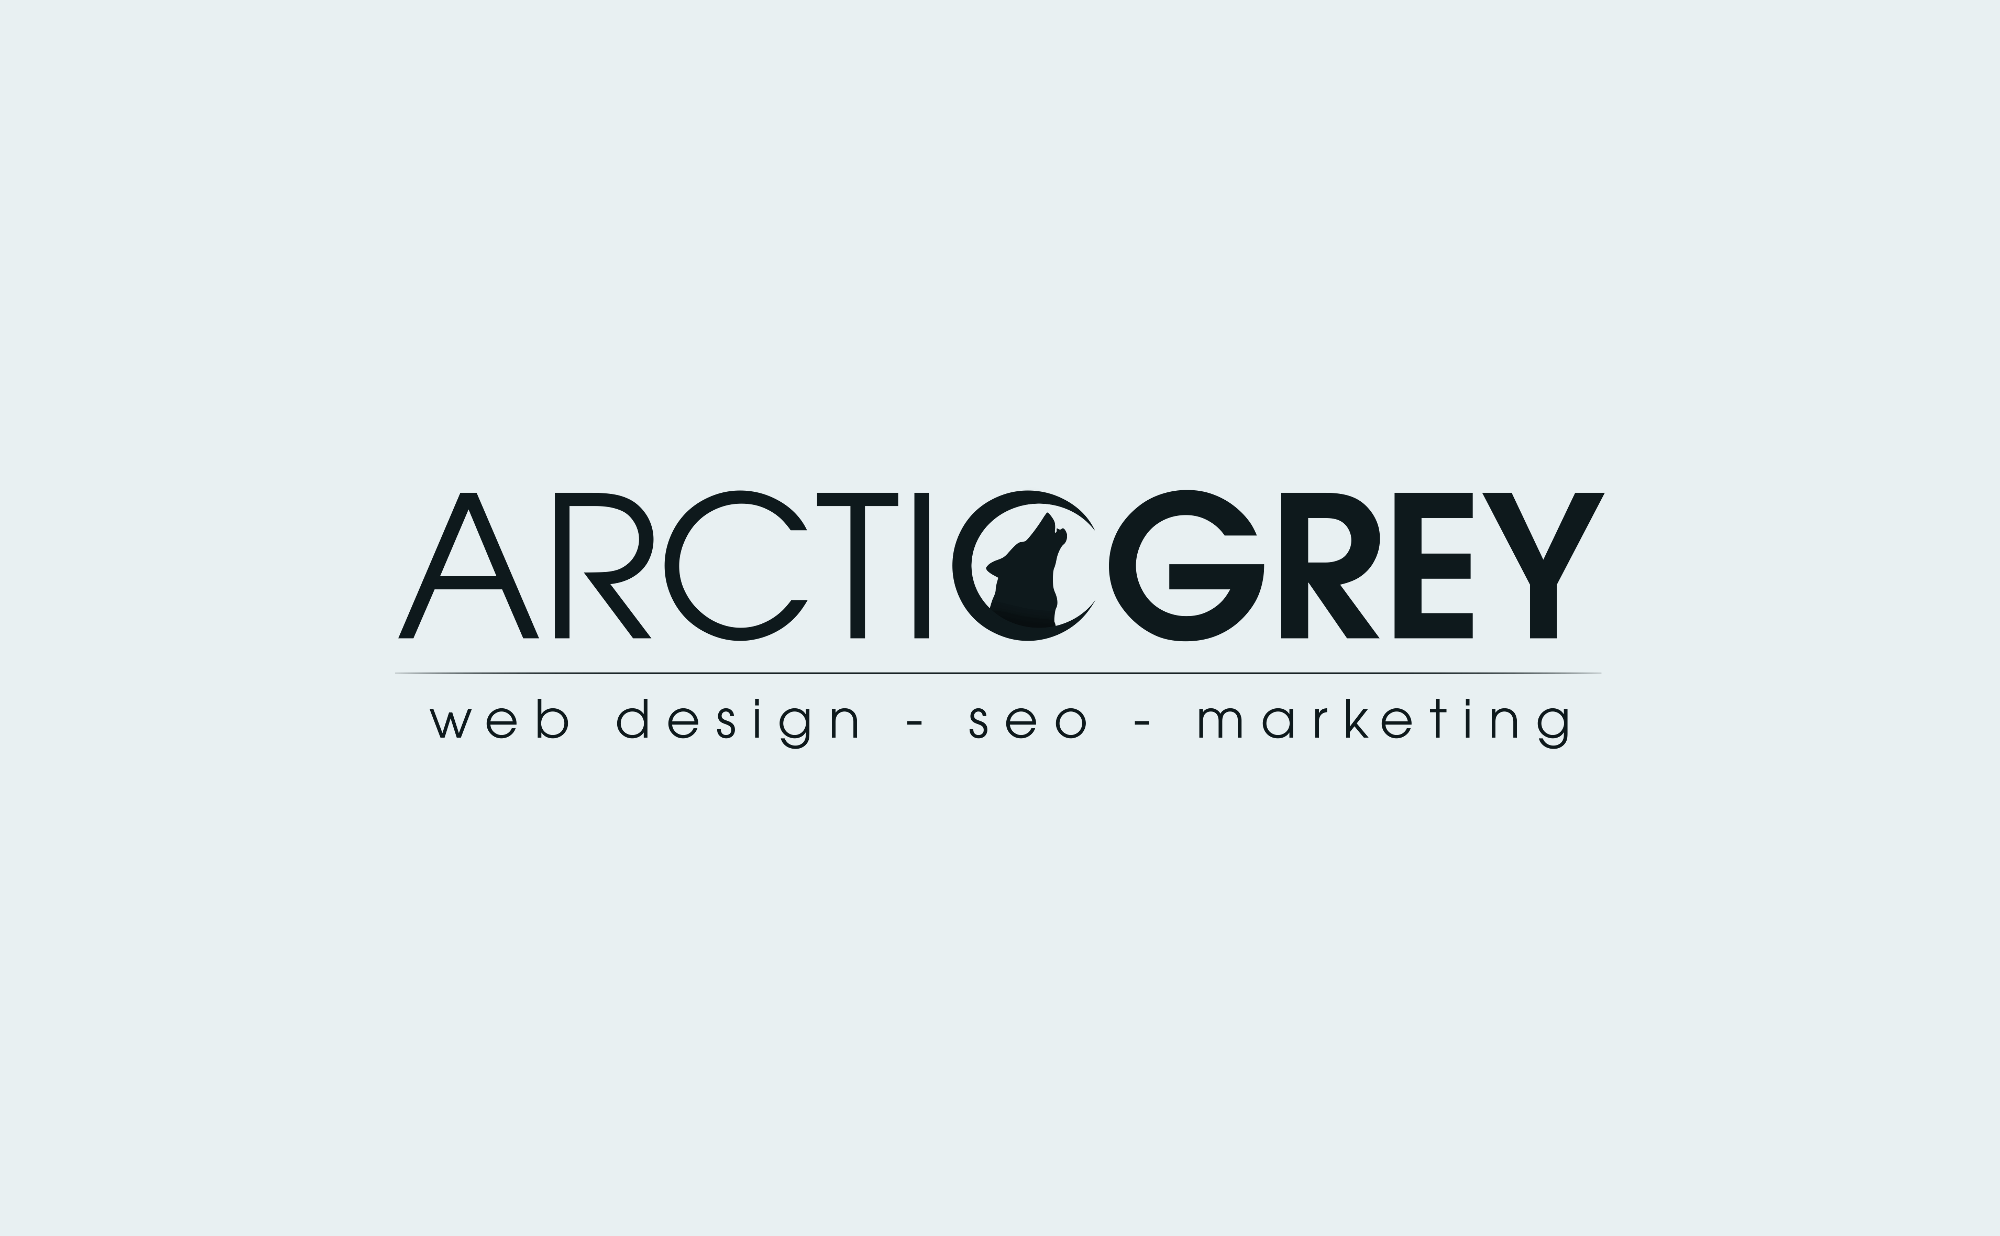 Top SEO Web Development Agency Logo: Arctic Grey Inc